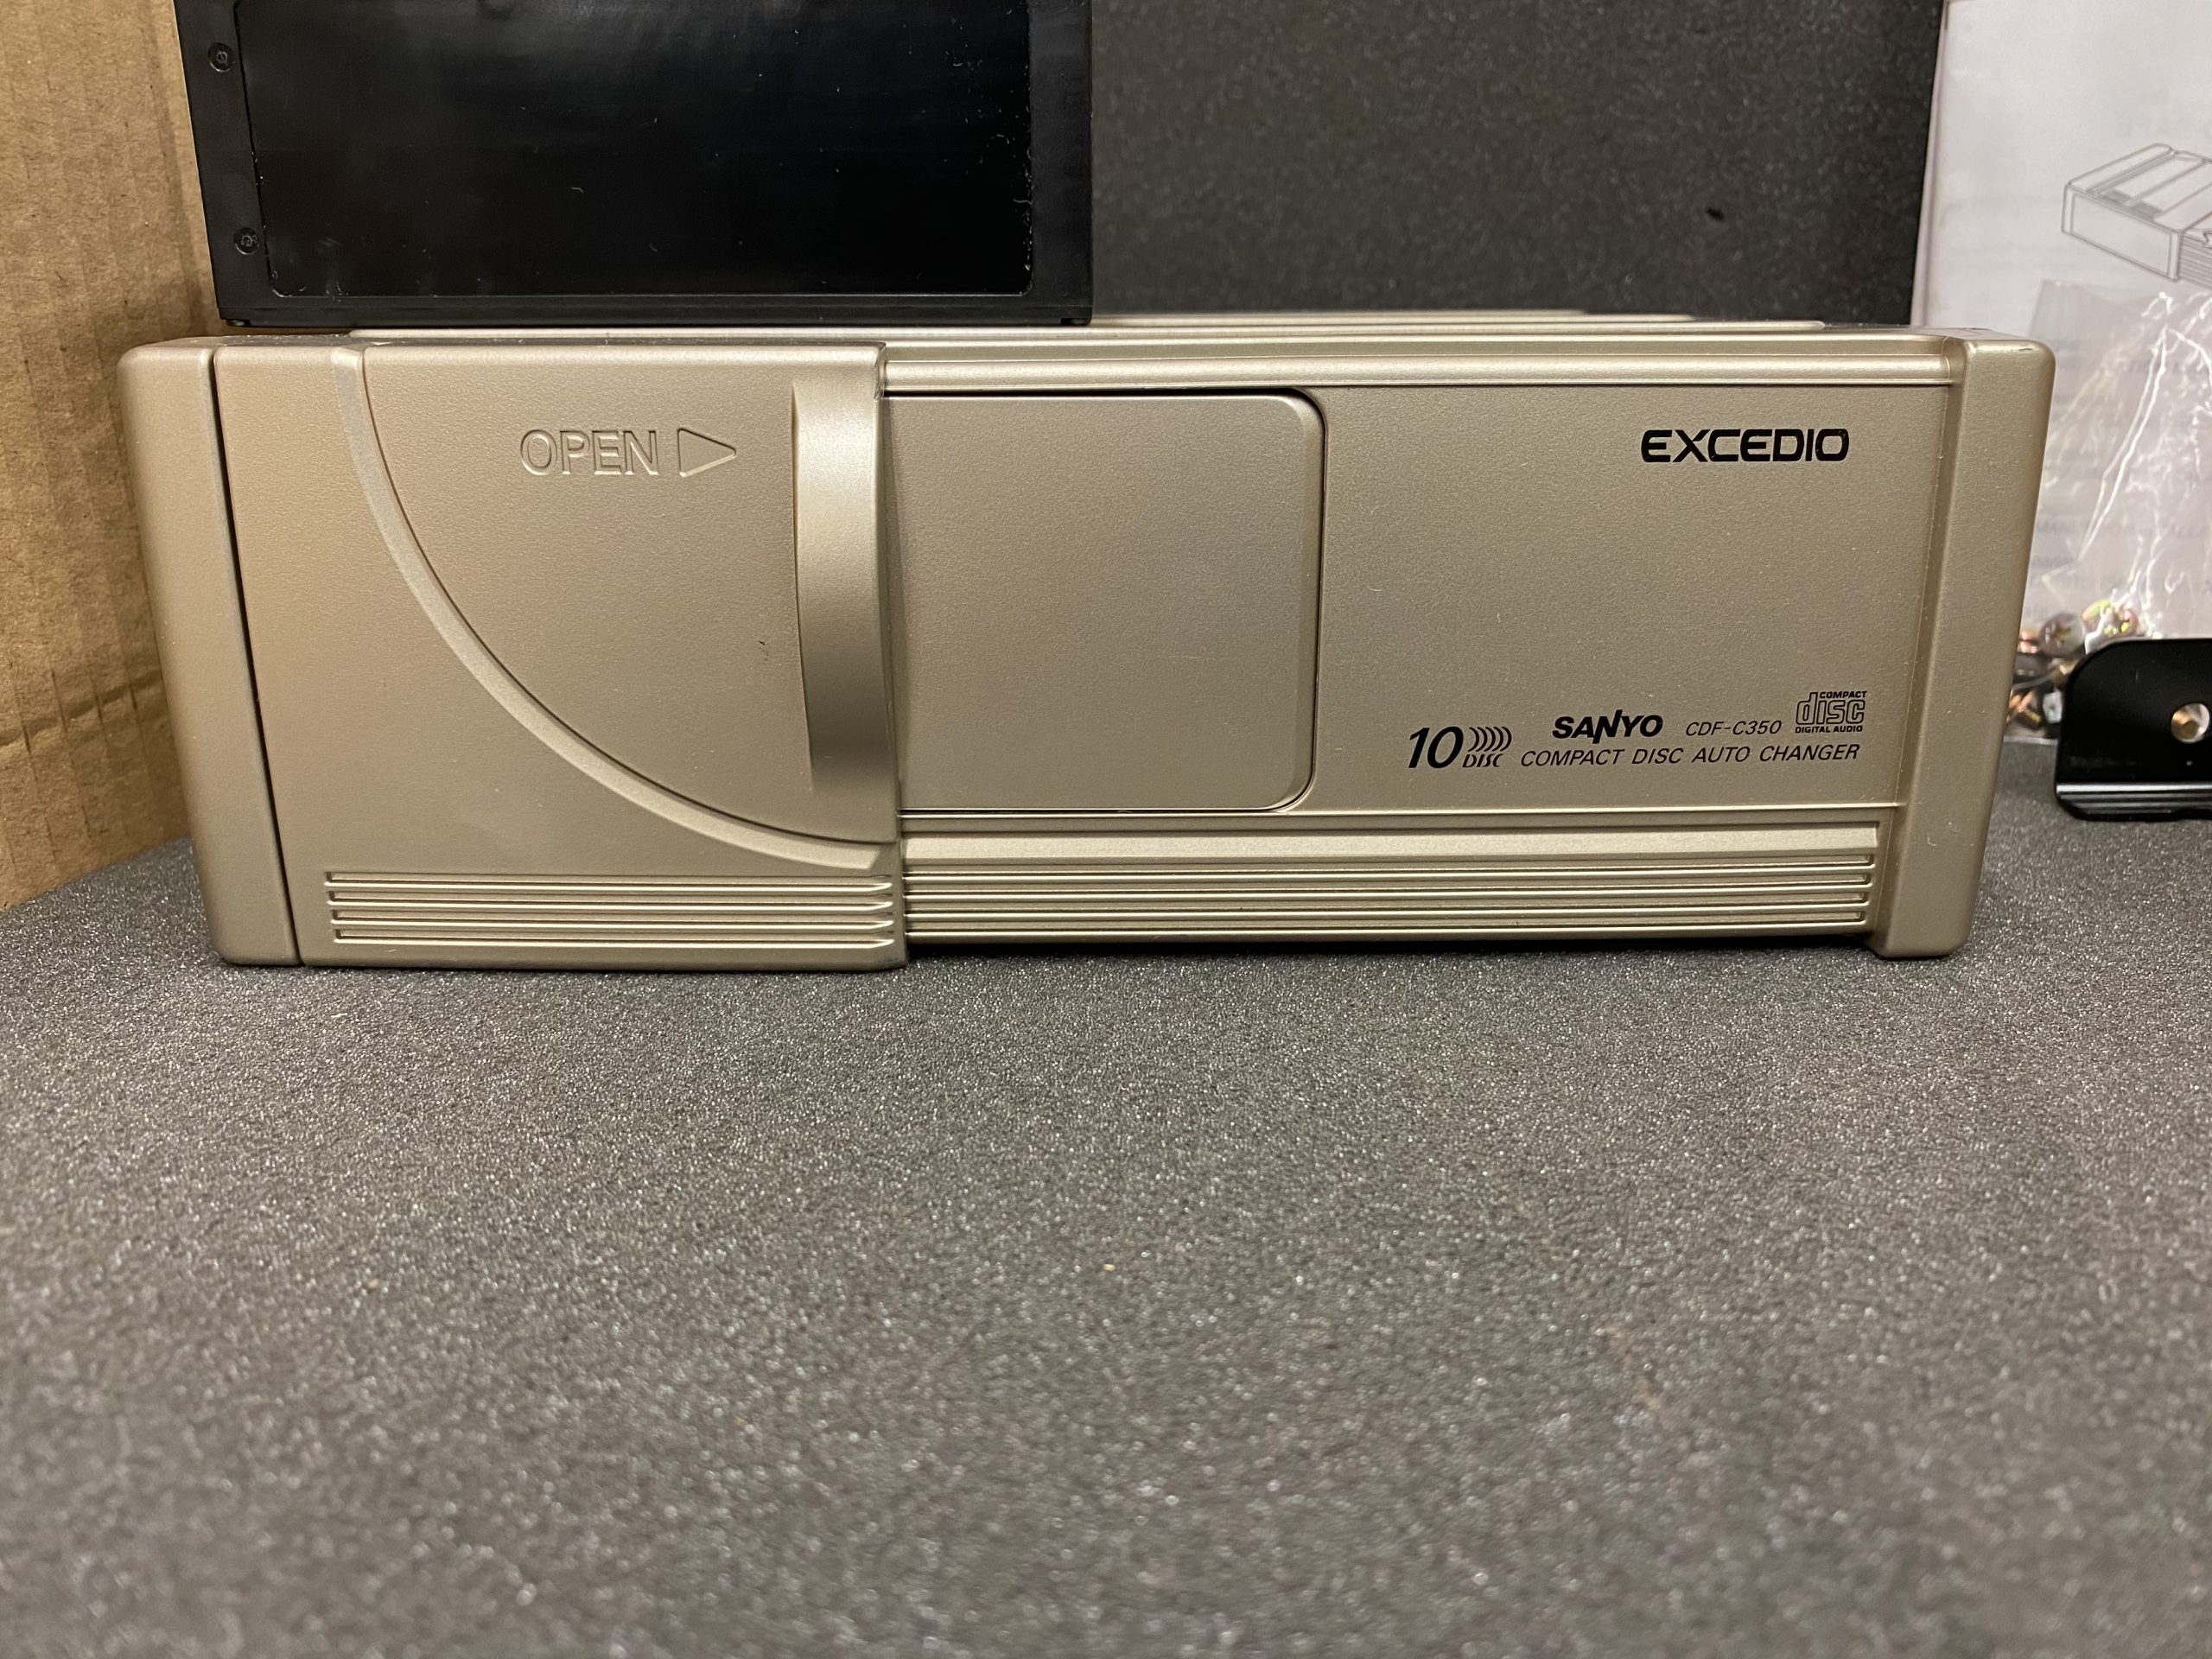 SANYO CDF-C350 Compact Disc Auto Changer Complete Kit In Original Box Quick Post 